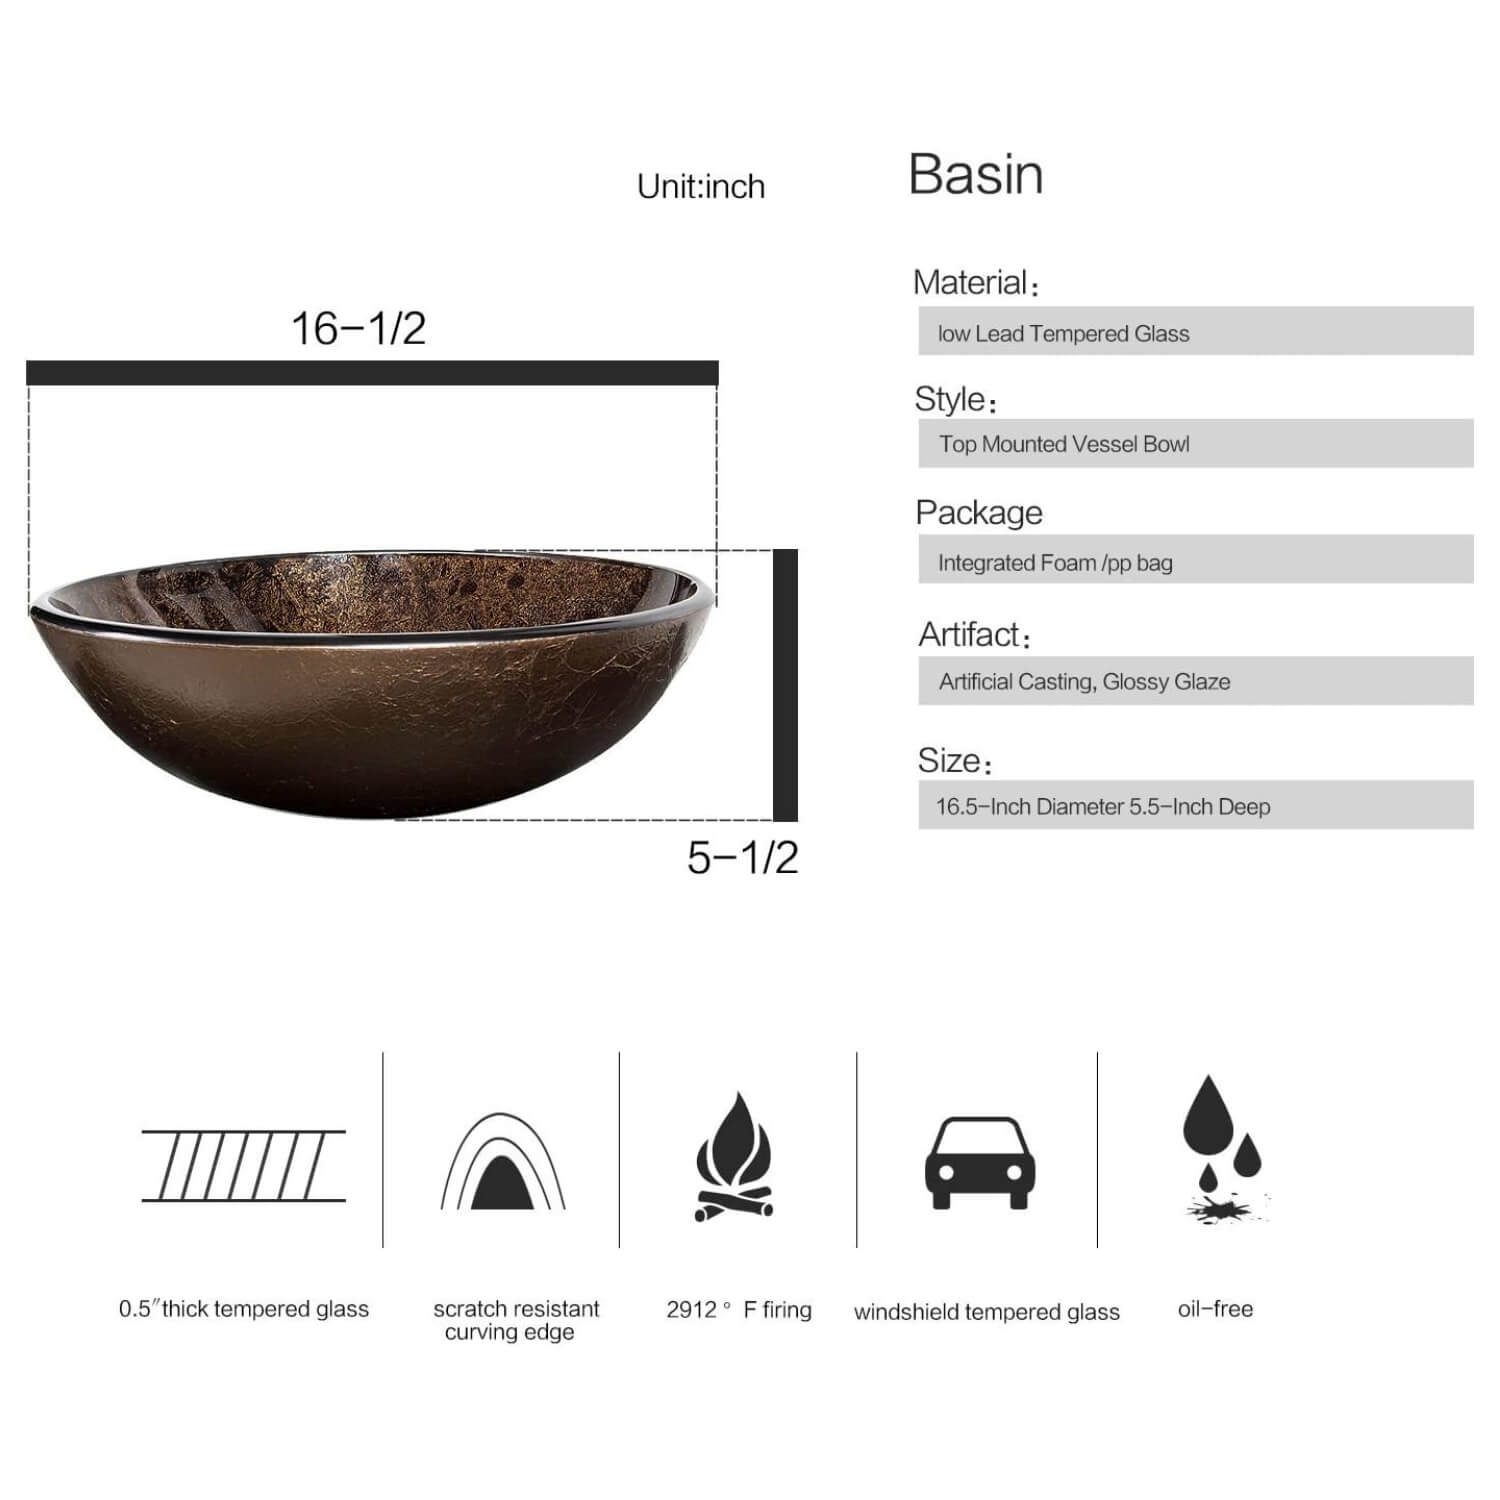 Description of brown glass sink